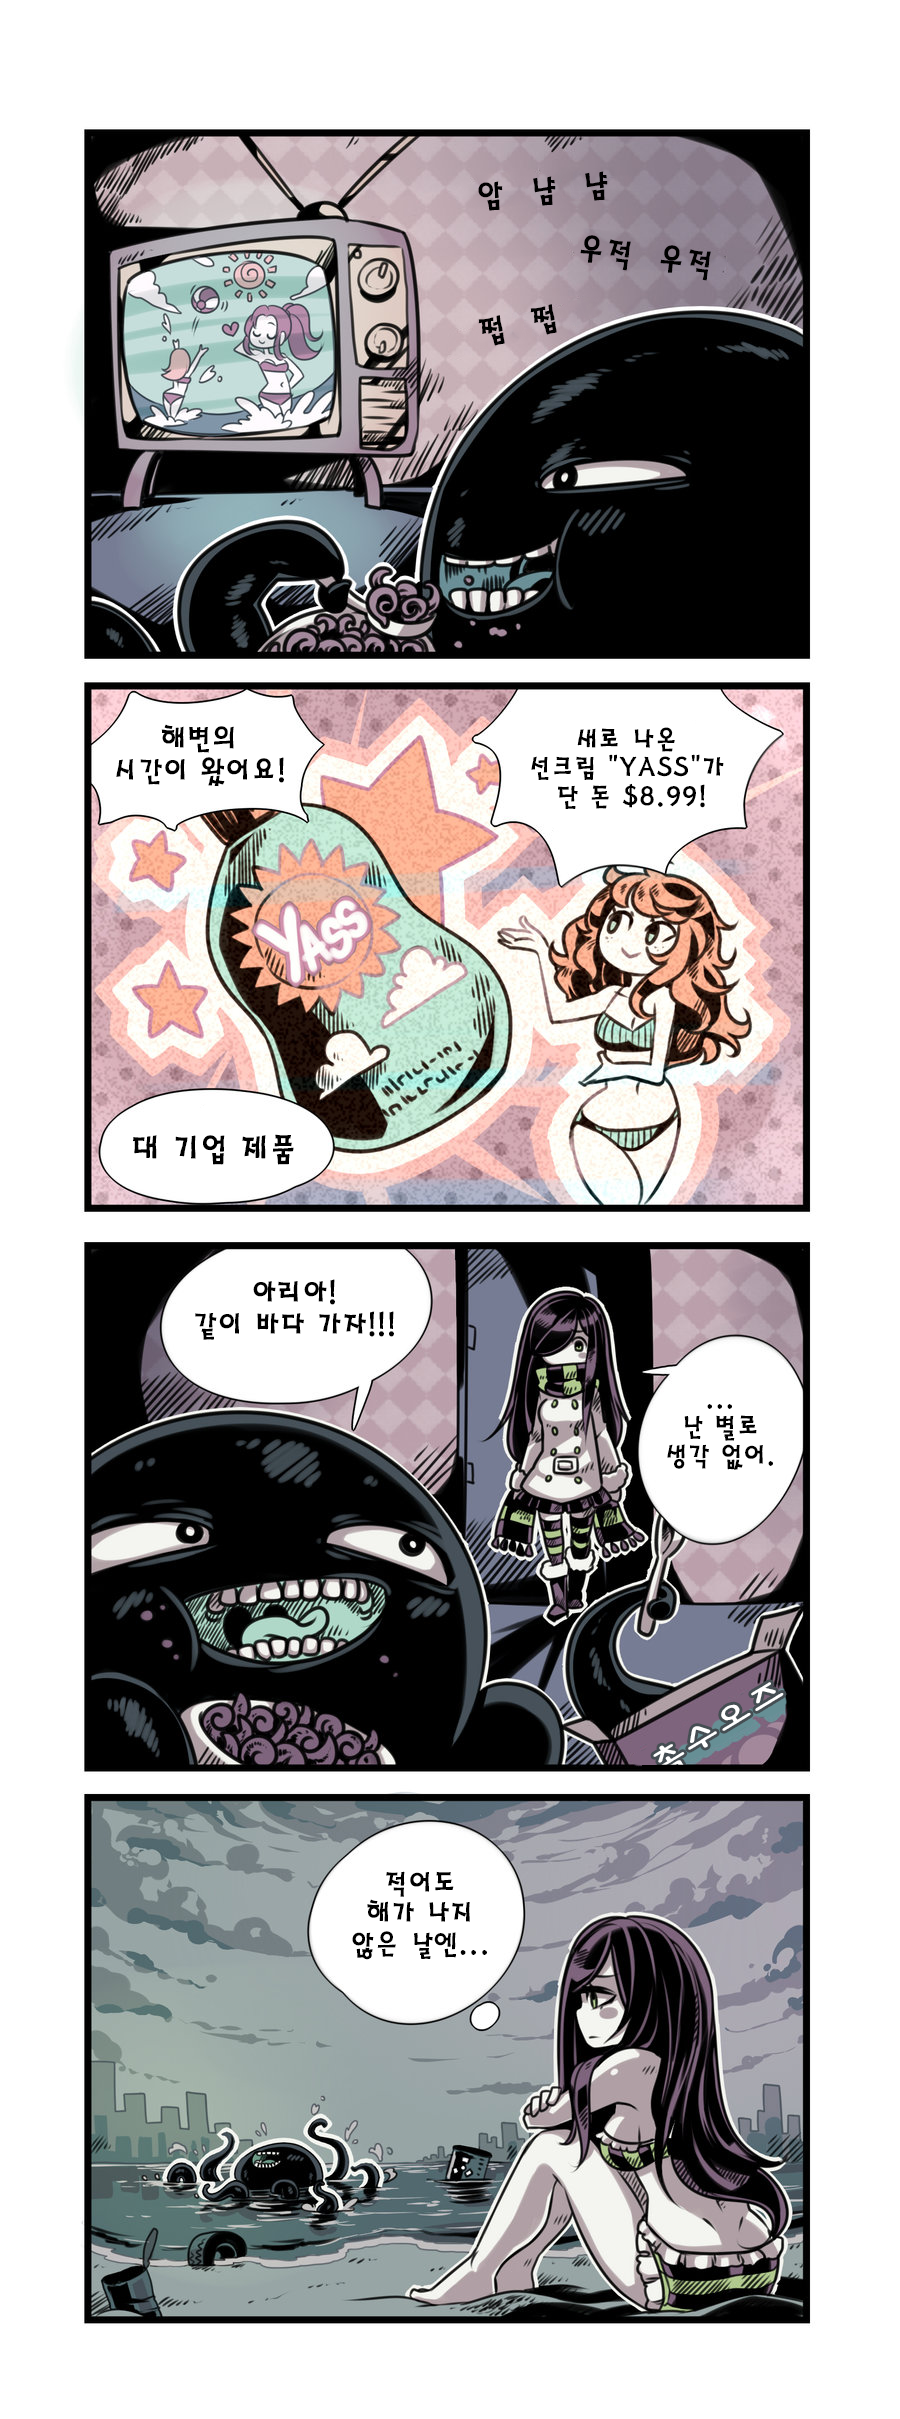 The Crawling City - 6 (Korean Translated)